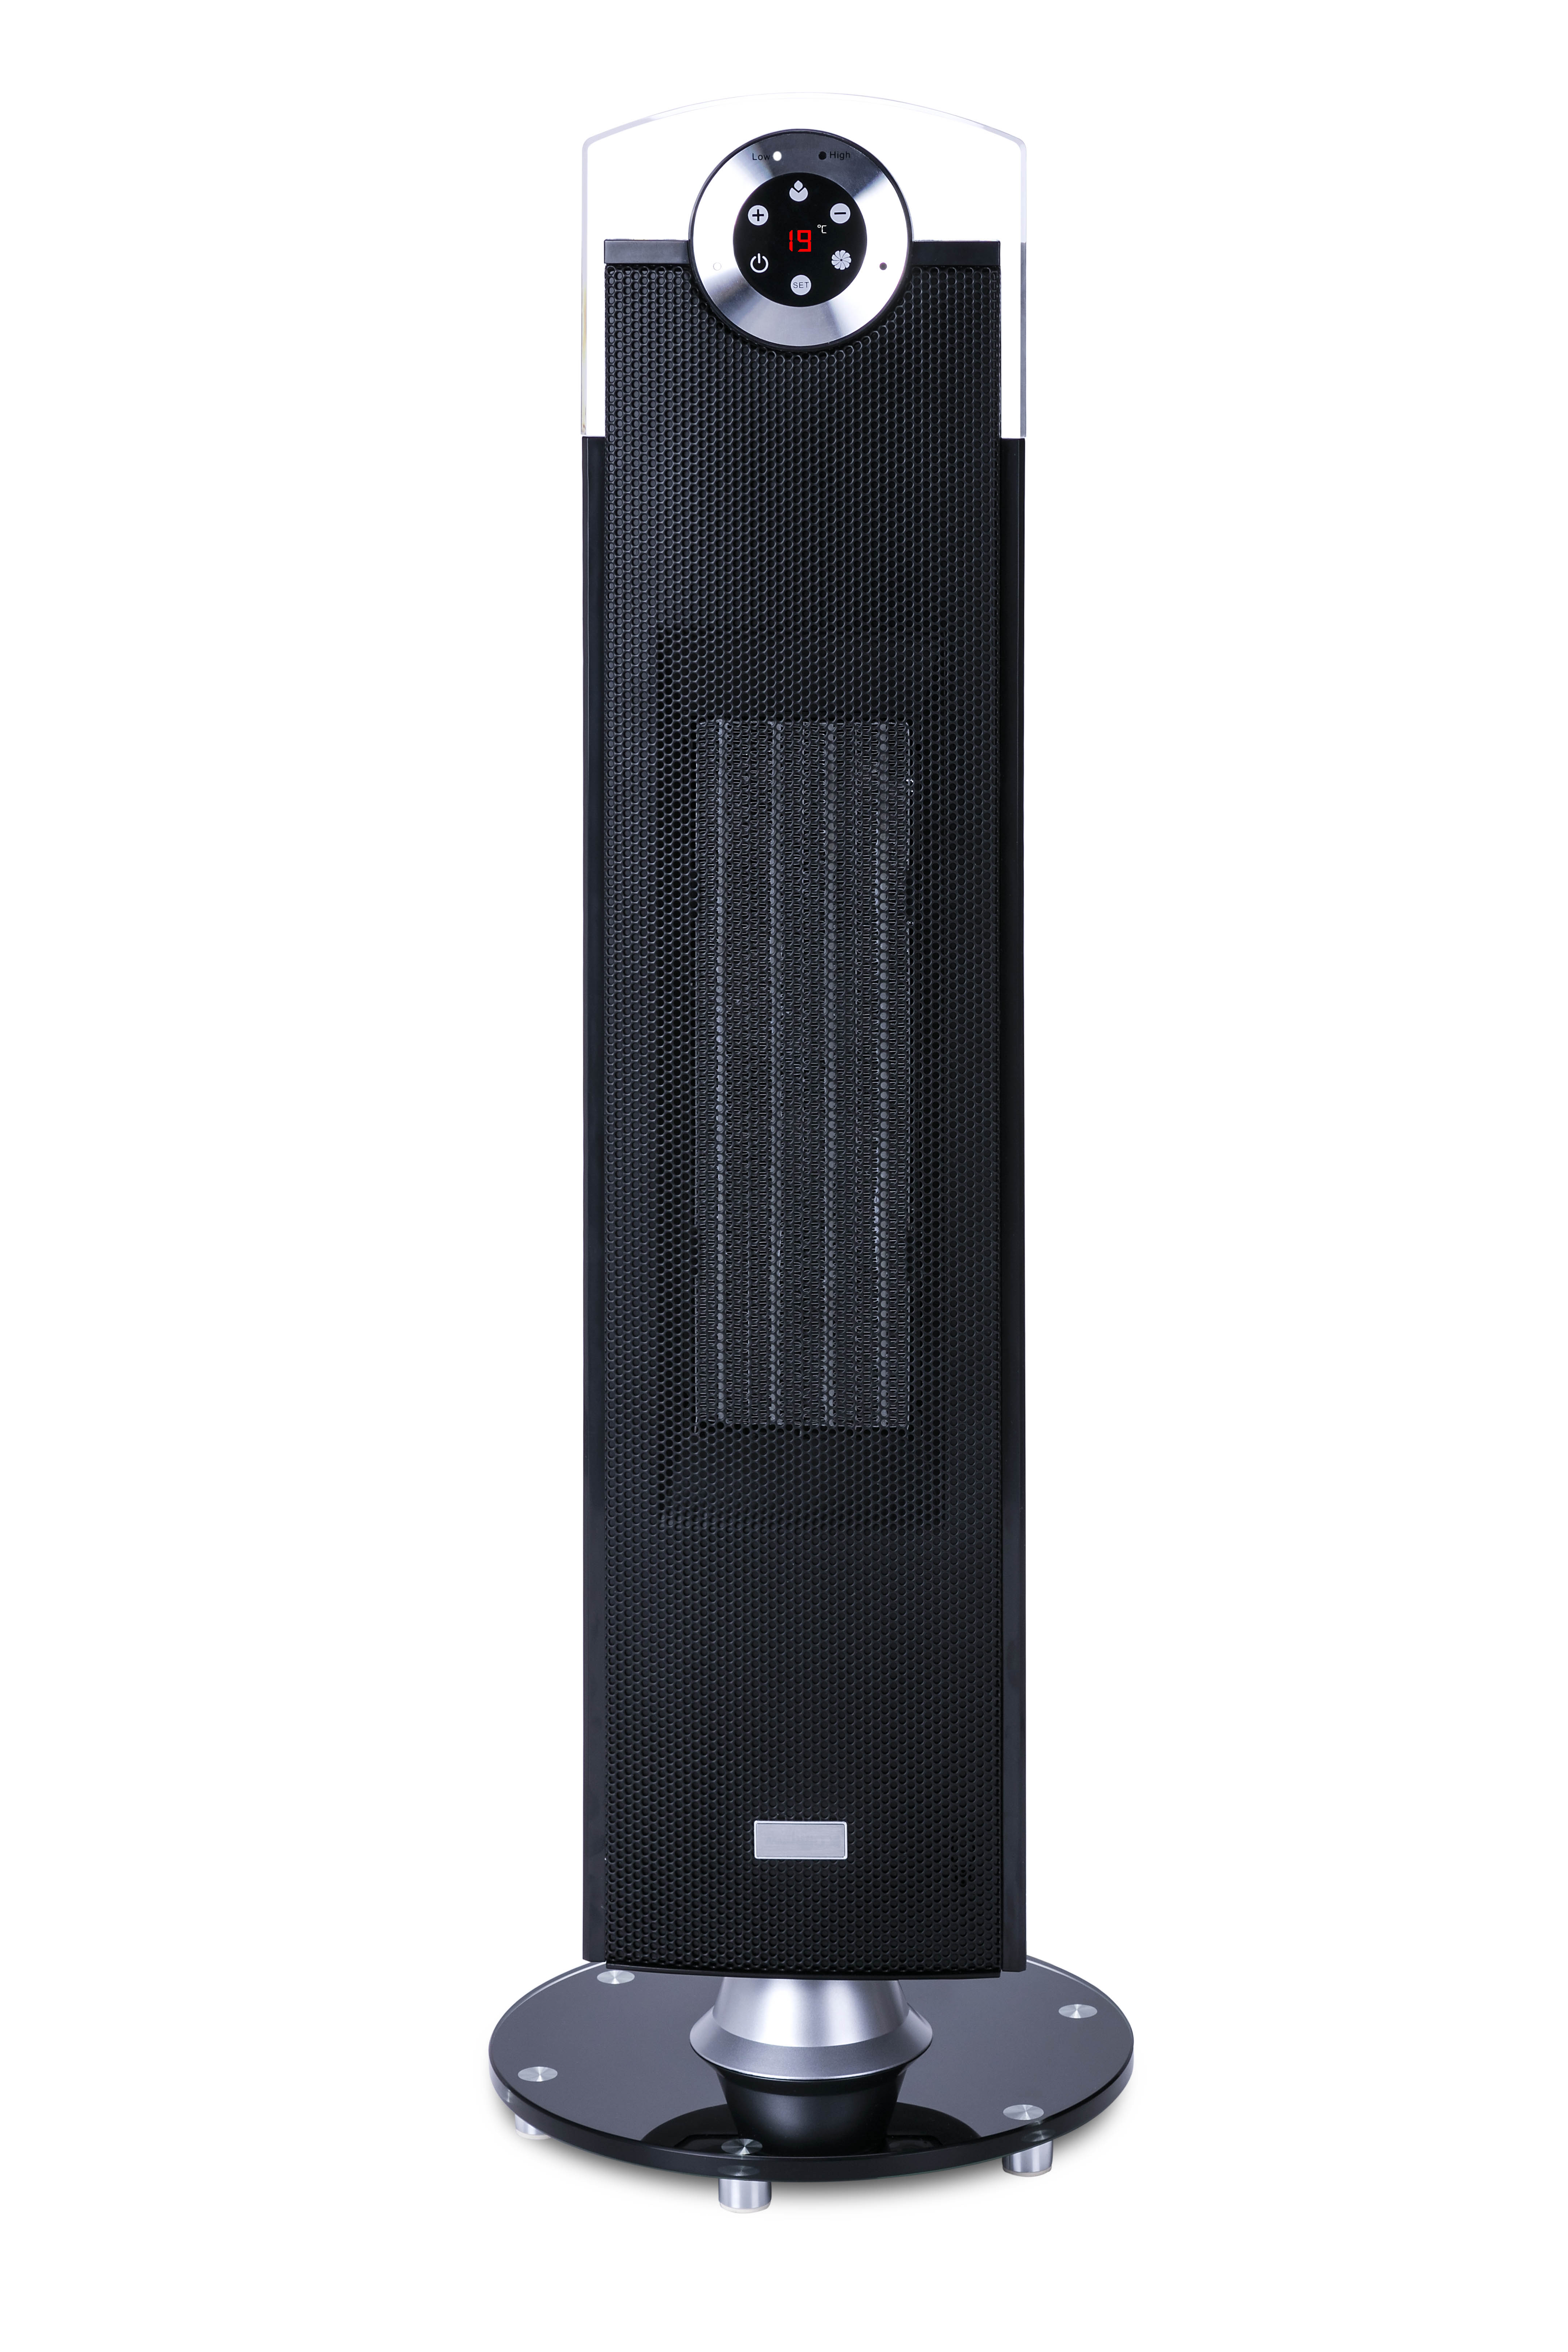 Newteck Rhapsody Calefactor Ceramico 2500W - 2 Niveles de Potencia - Temporizador - Oscilacion - Mando a Distancia - Color Negro